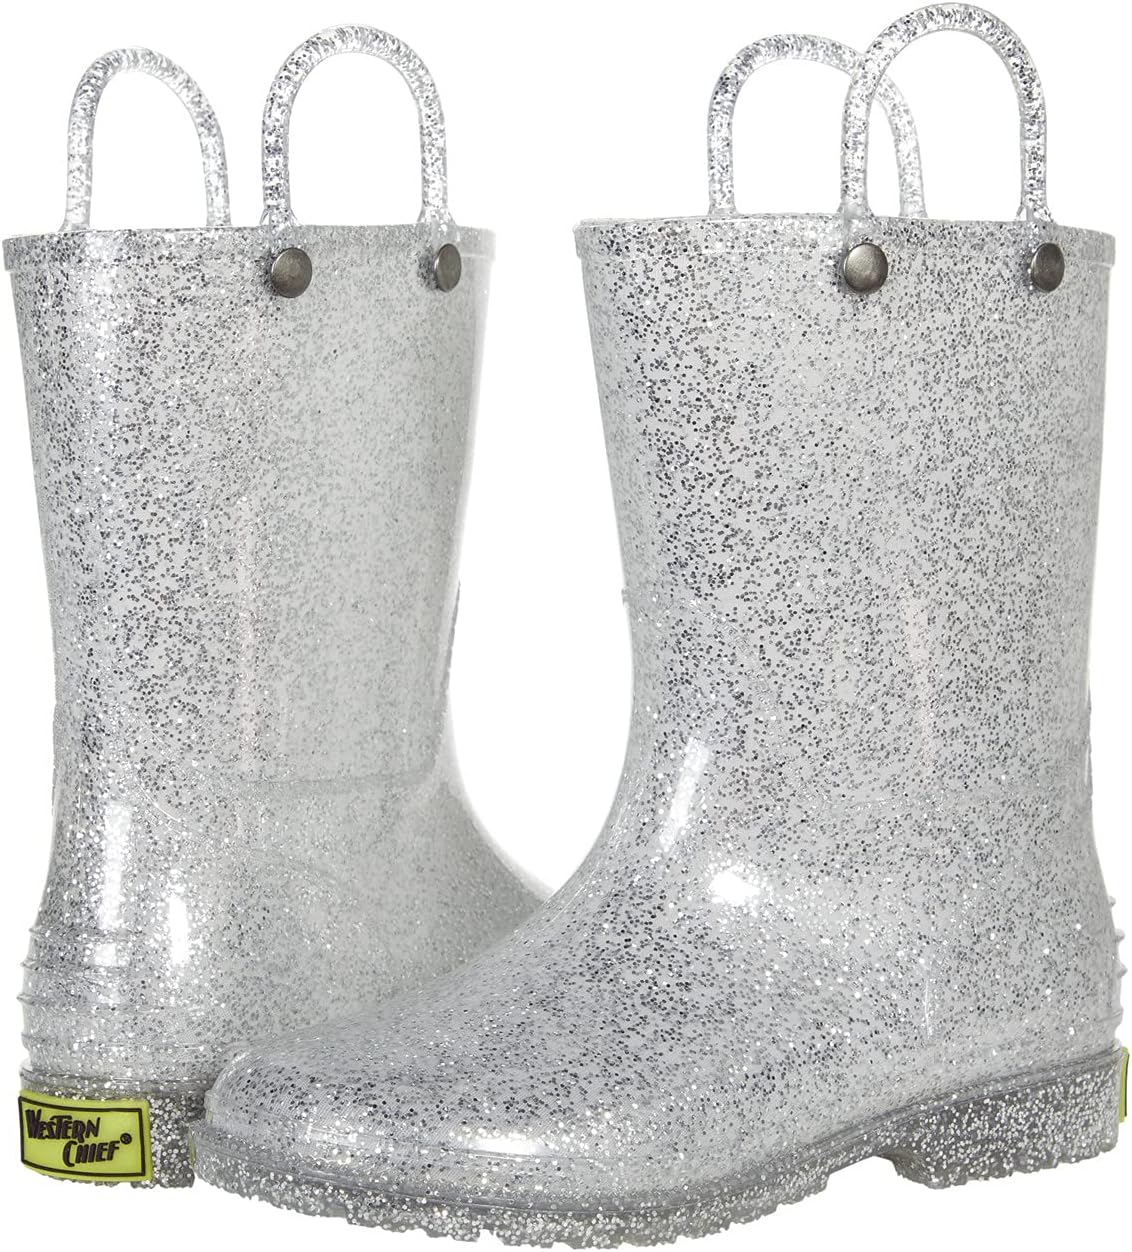 сапоги резиновые standard next цвет silver glitter Резиновые сапоги Glitter Rain Boots Western Chief, цвет Silver